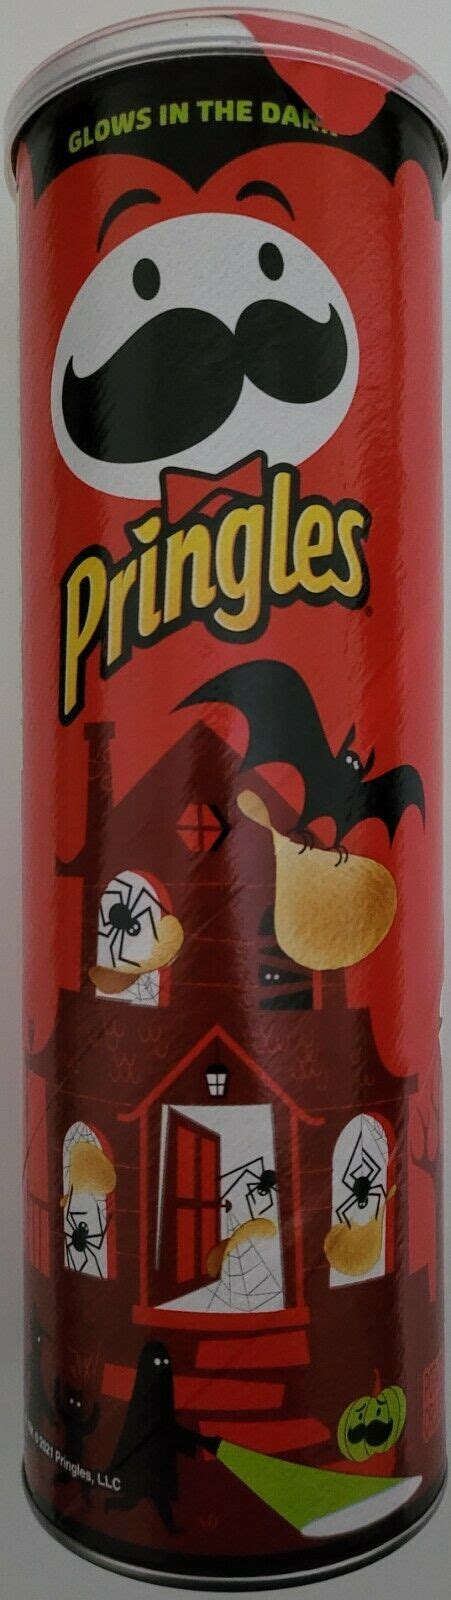 New Halloween Glow In The Dark Pringles Original Flavor Potato Chips 52 Oz